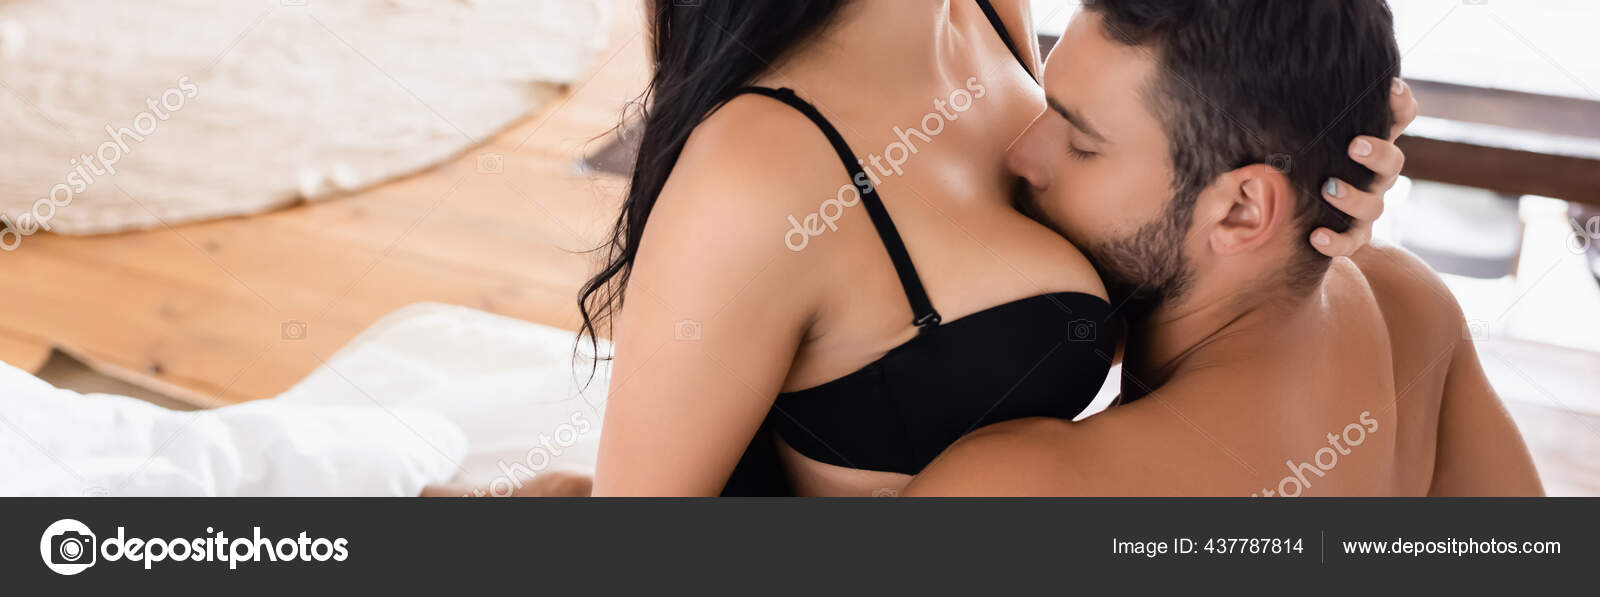 Young Man Closed Eyes Kissing Breast Sexy Woman Black Bra Stock Photo by  ©VitalikRadko 437787814